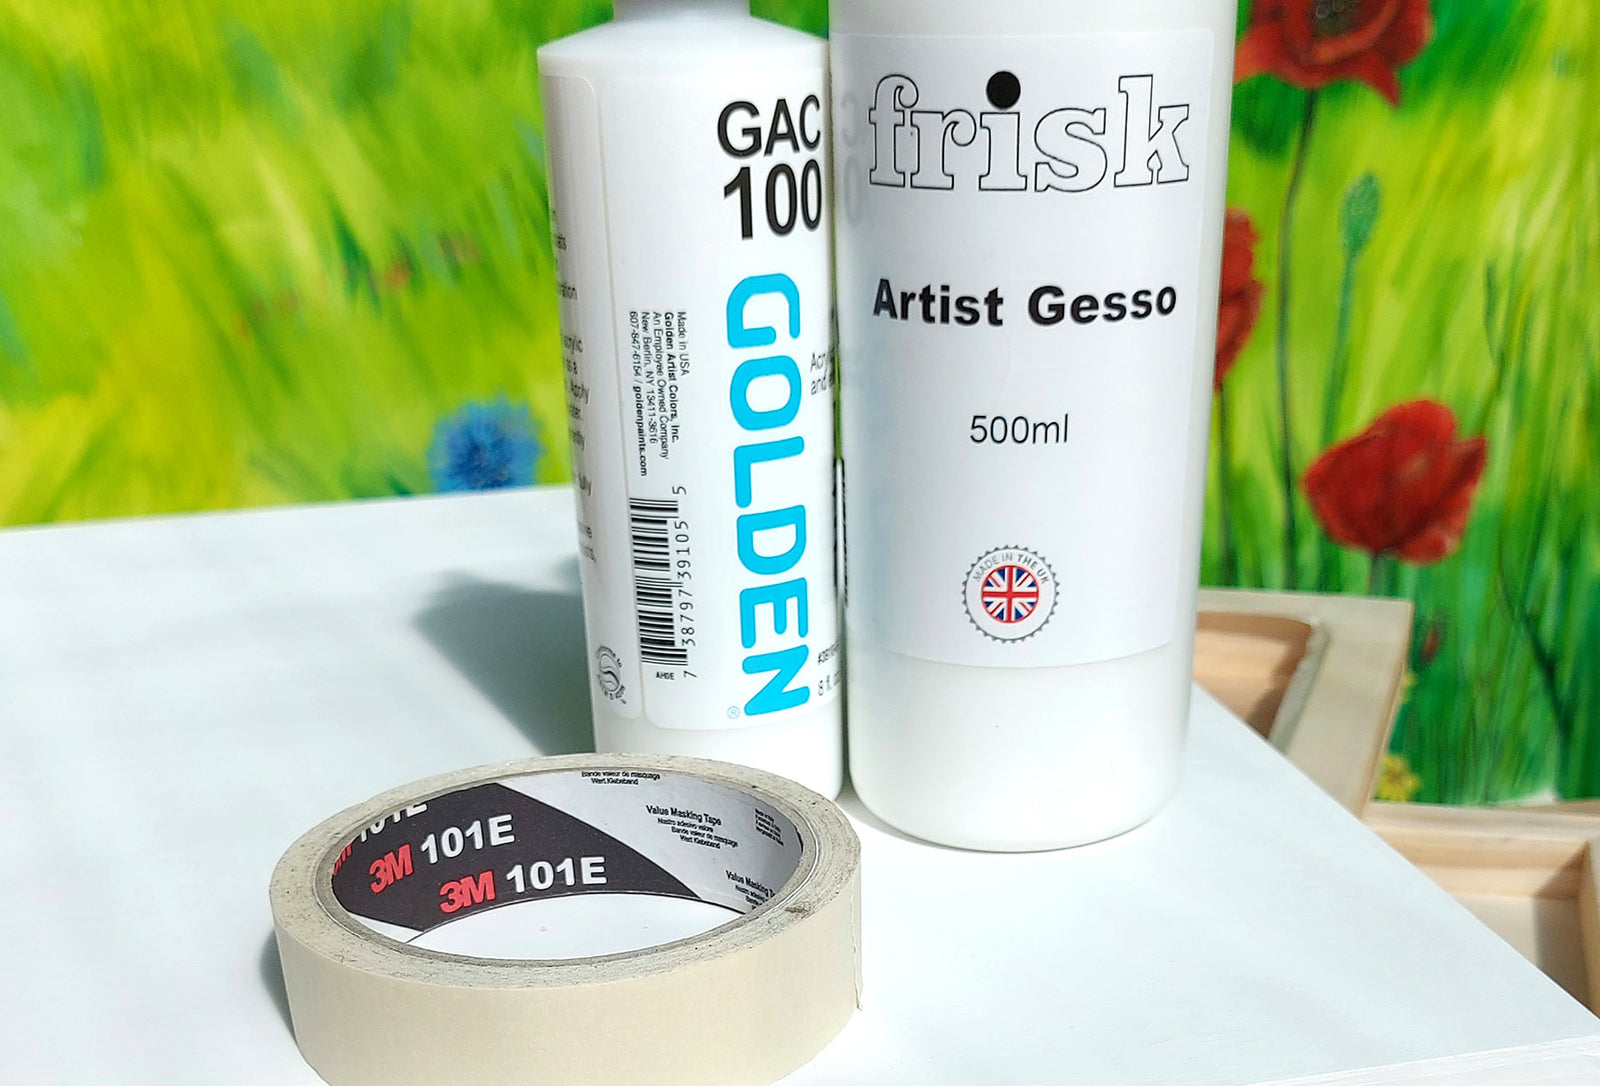 Gesso Board 50x60x3cm - Cork Art Supplies Ltd